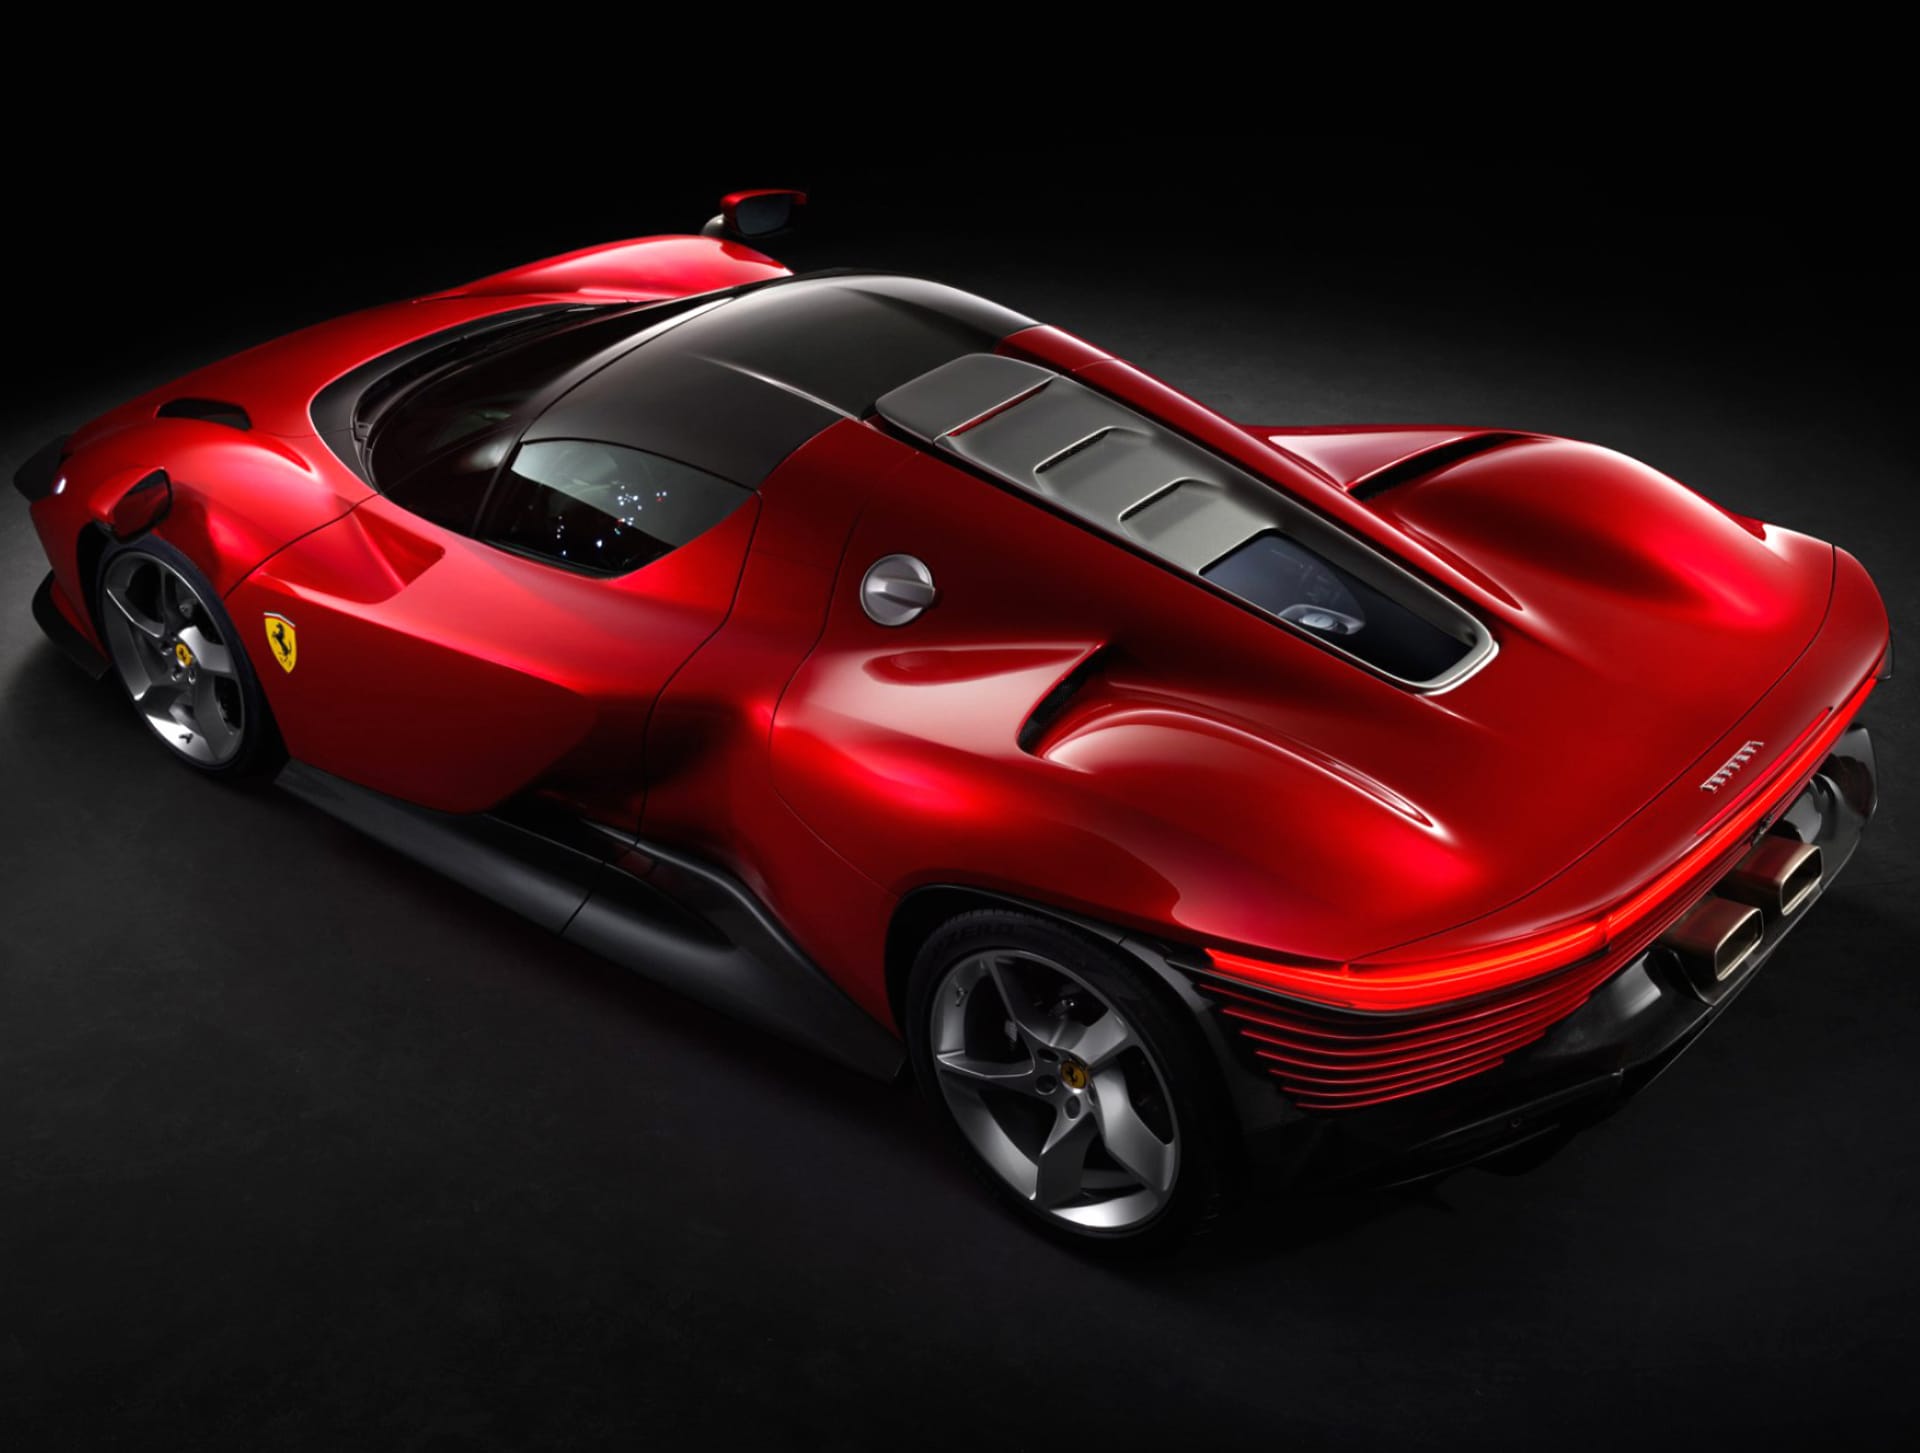 Ferrari Daytona SP3 at 640 x 1136 iPhone 5 size wallpapers HD quality